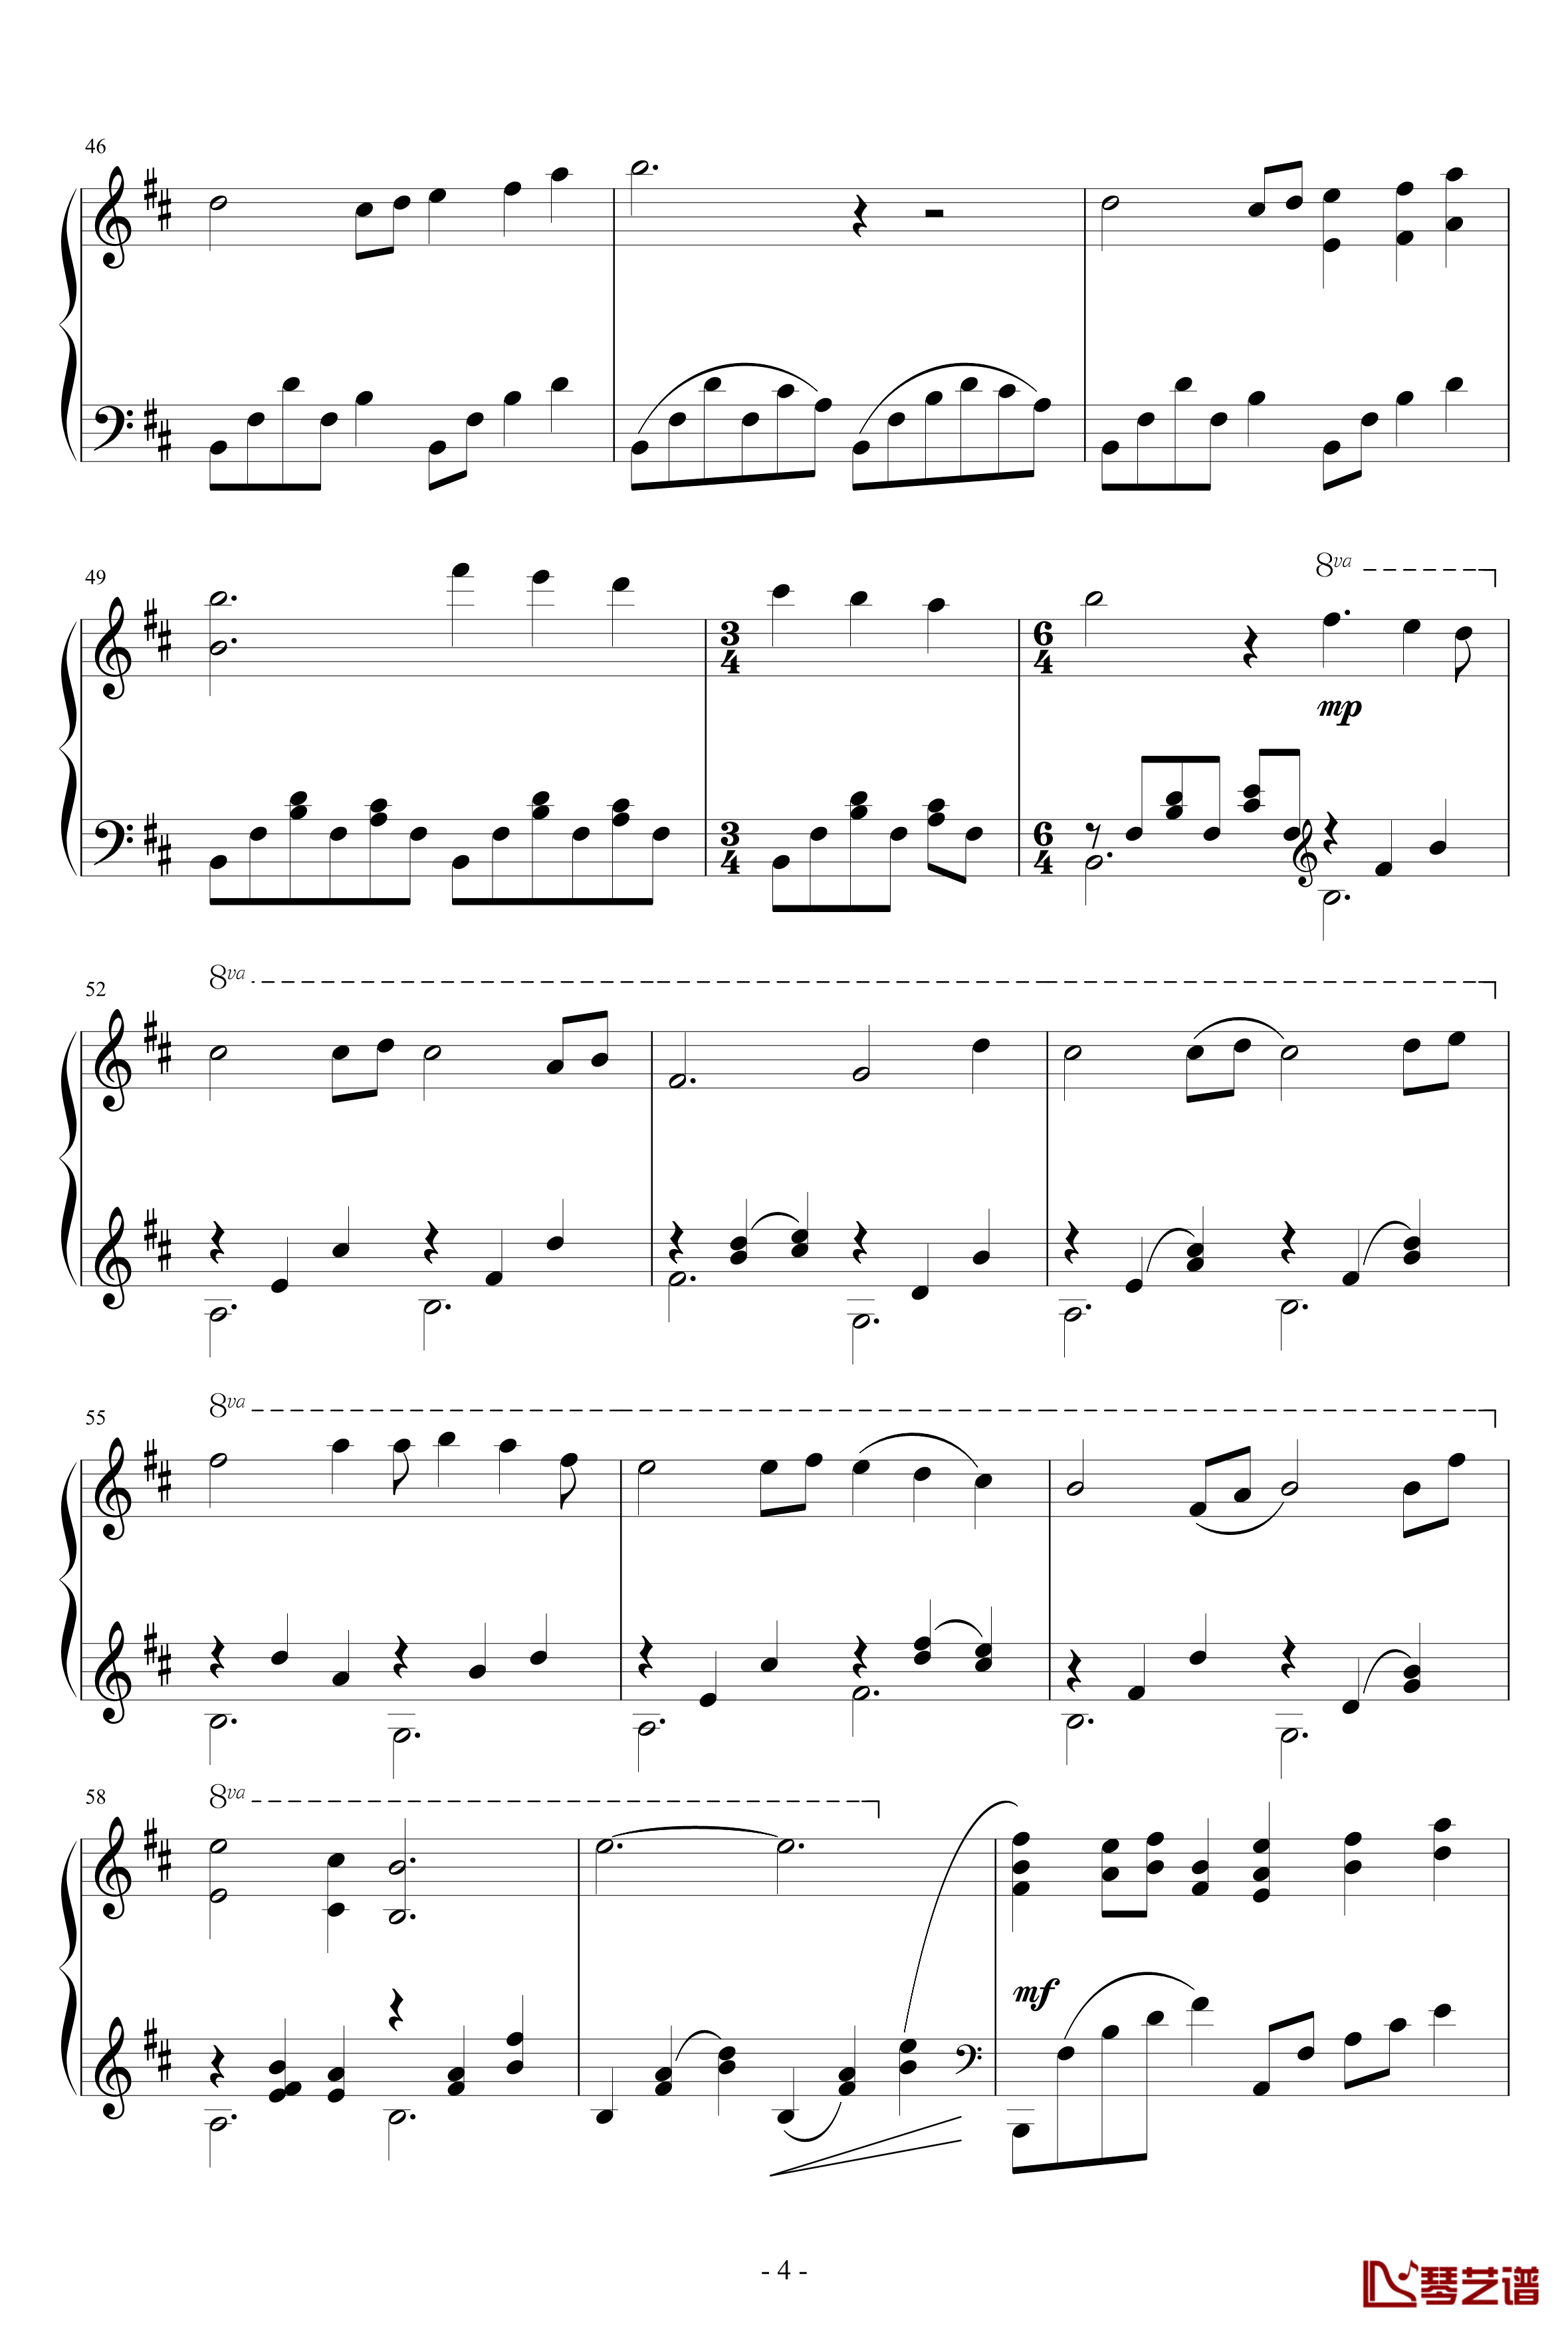 Paleoville's Higan钢琴谱-四目神4